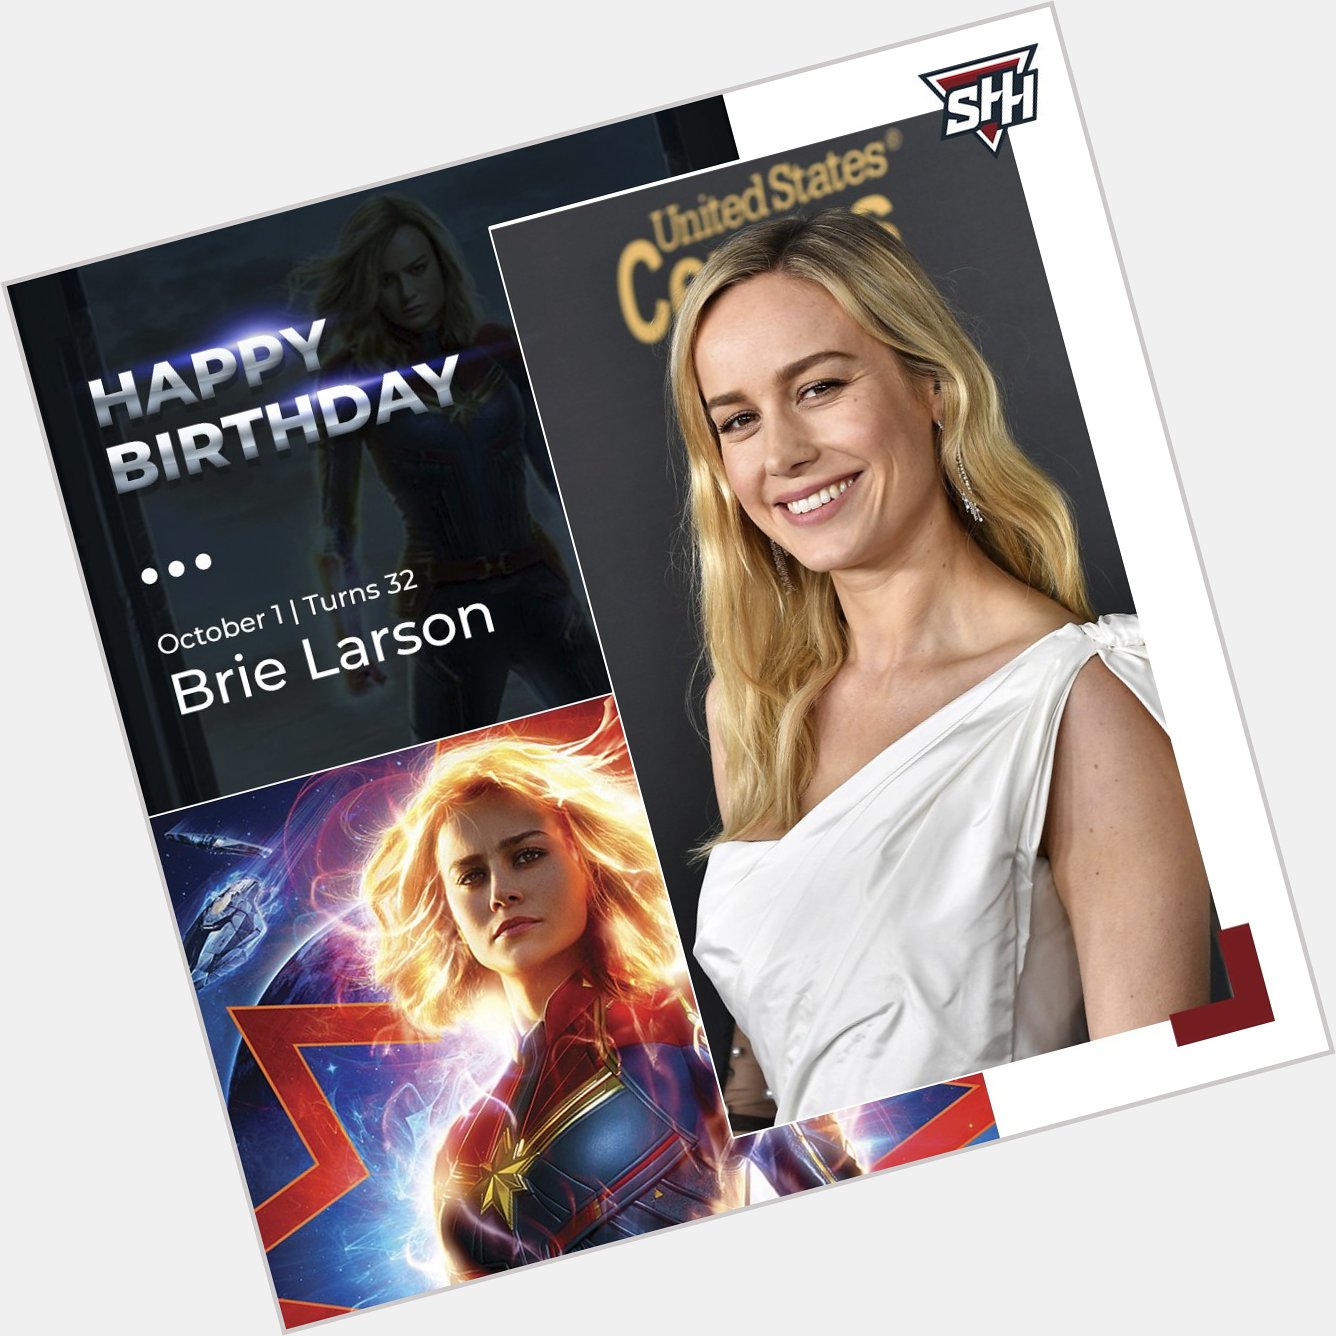 Happy Birthday to Captain Marvel star, Brie Larson! 